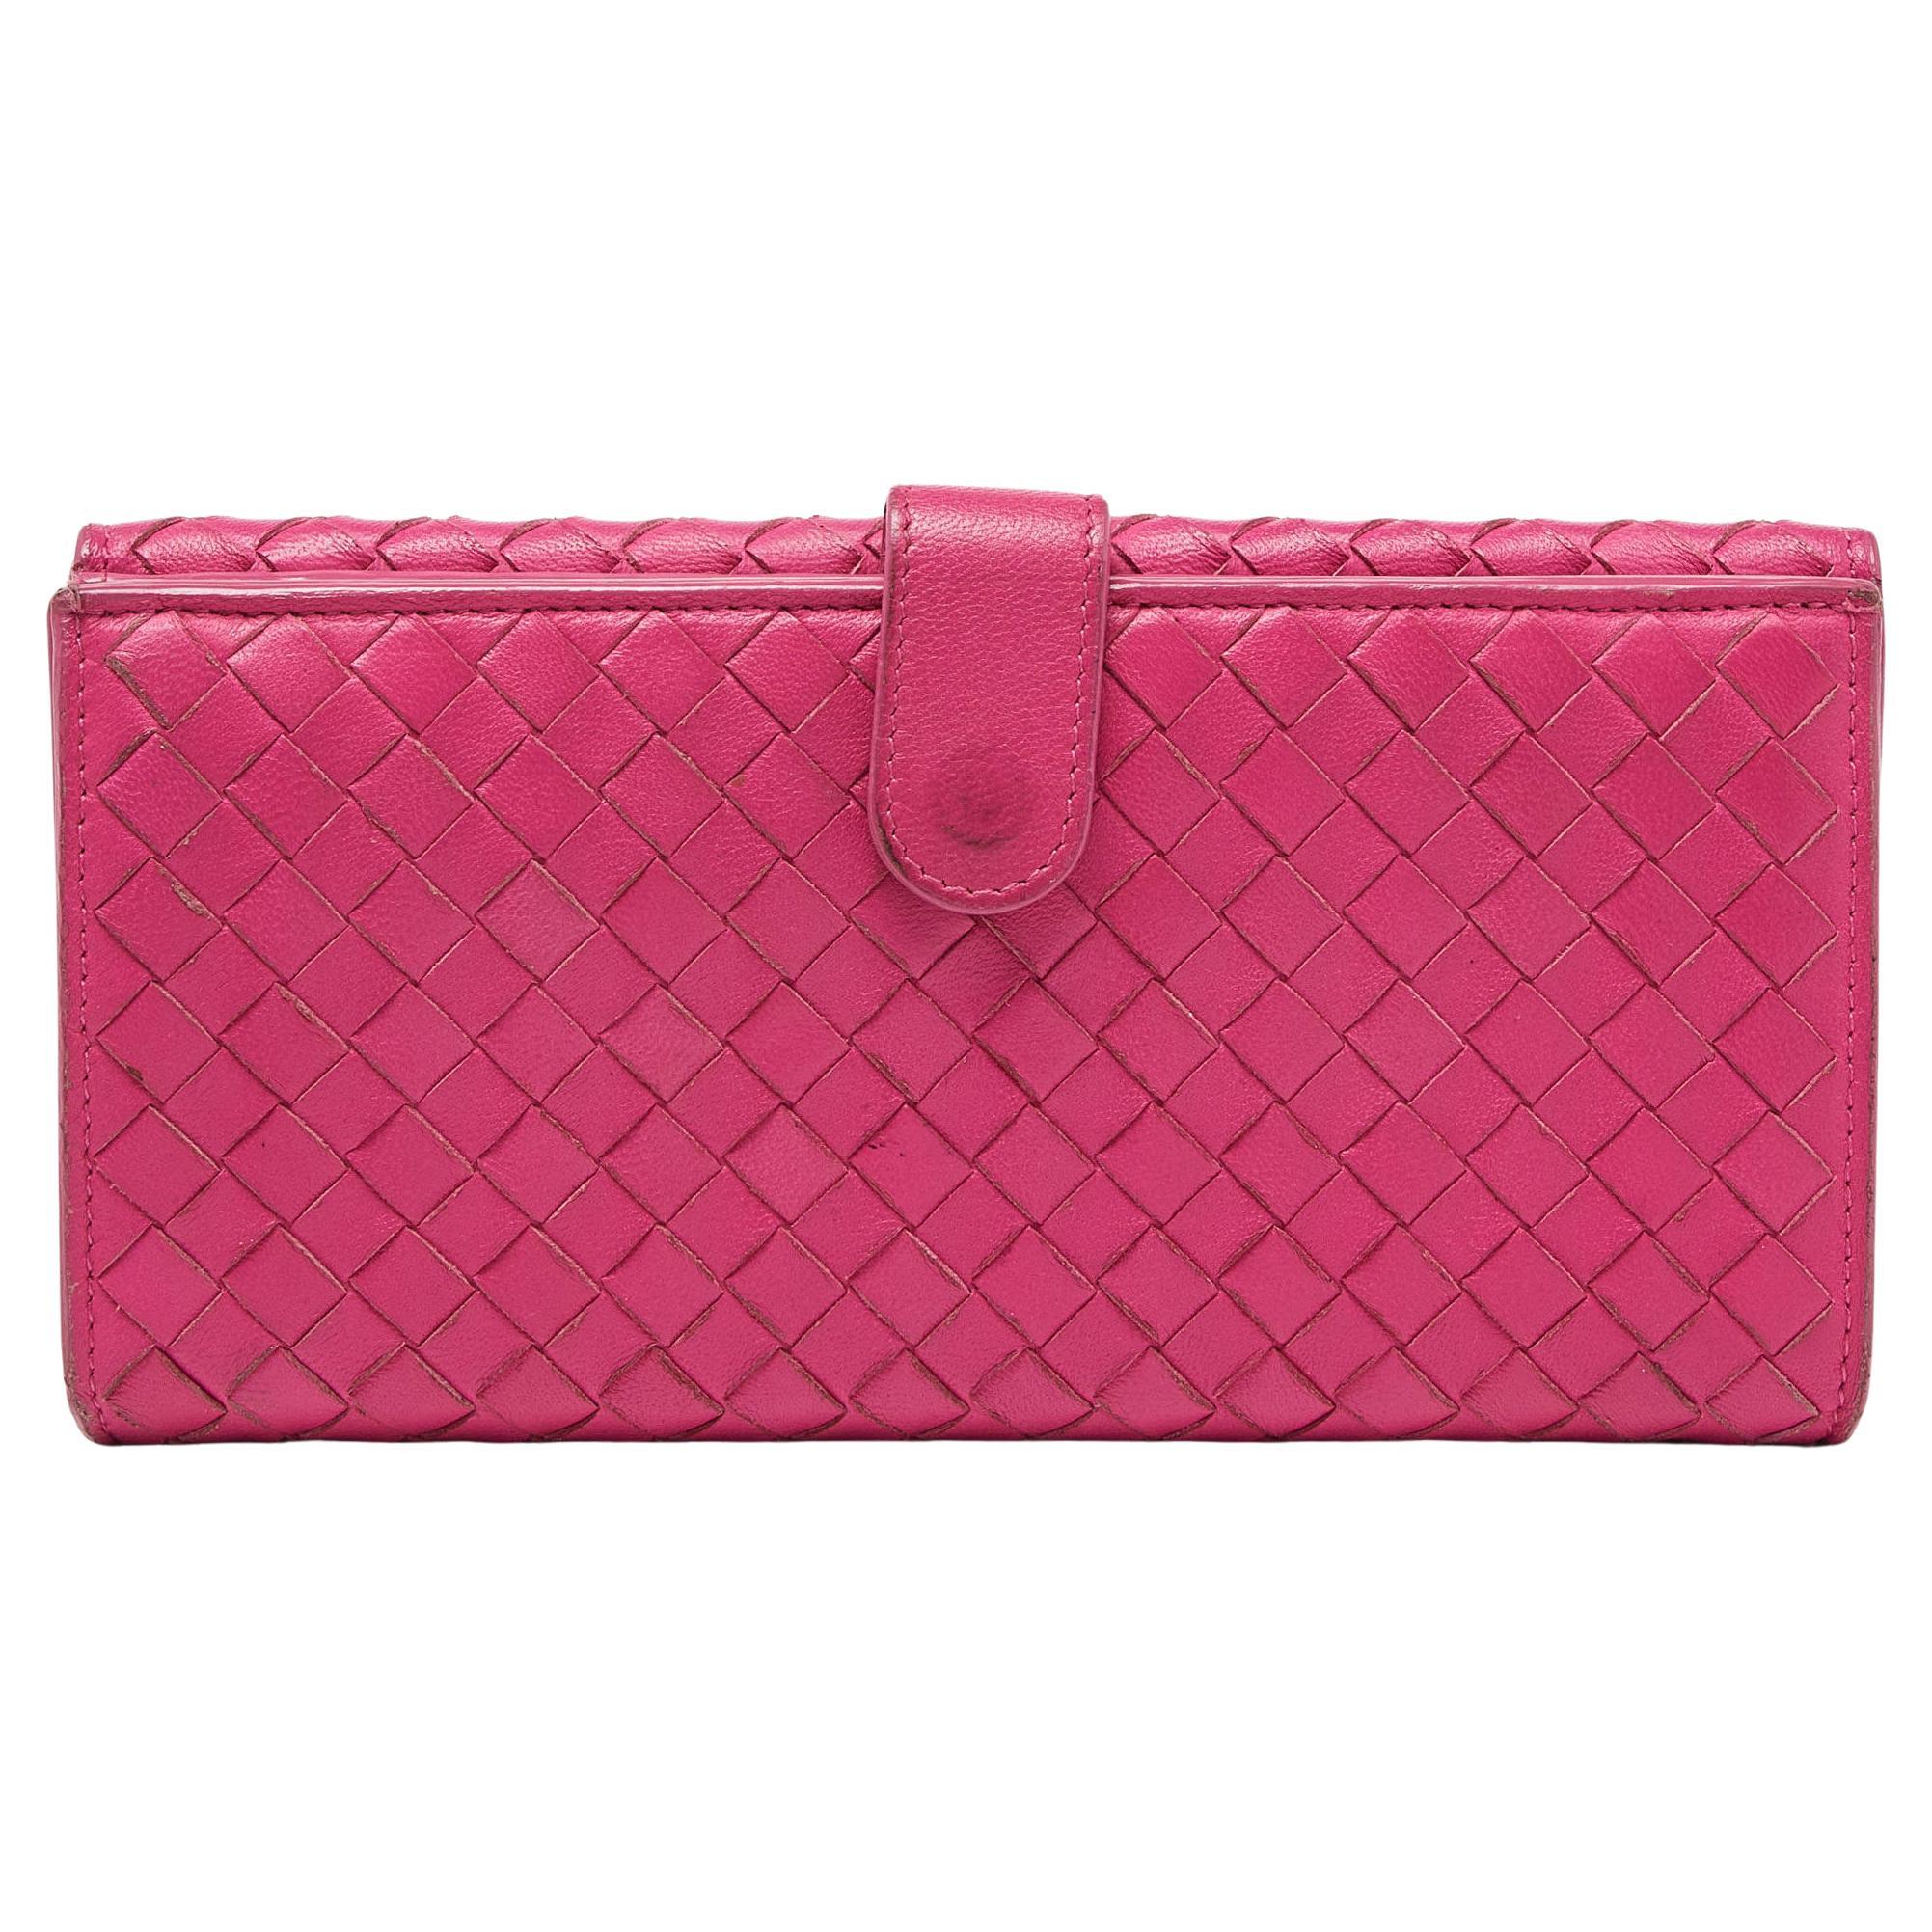 Bottega Veneta Pink Intrecciato Leather Flap Continental Wallet For Sale